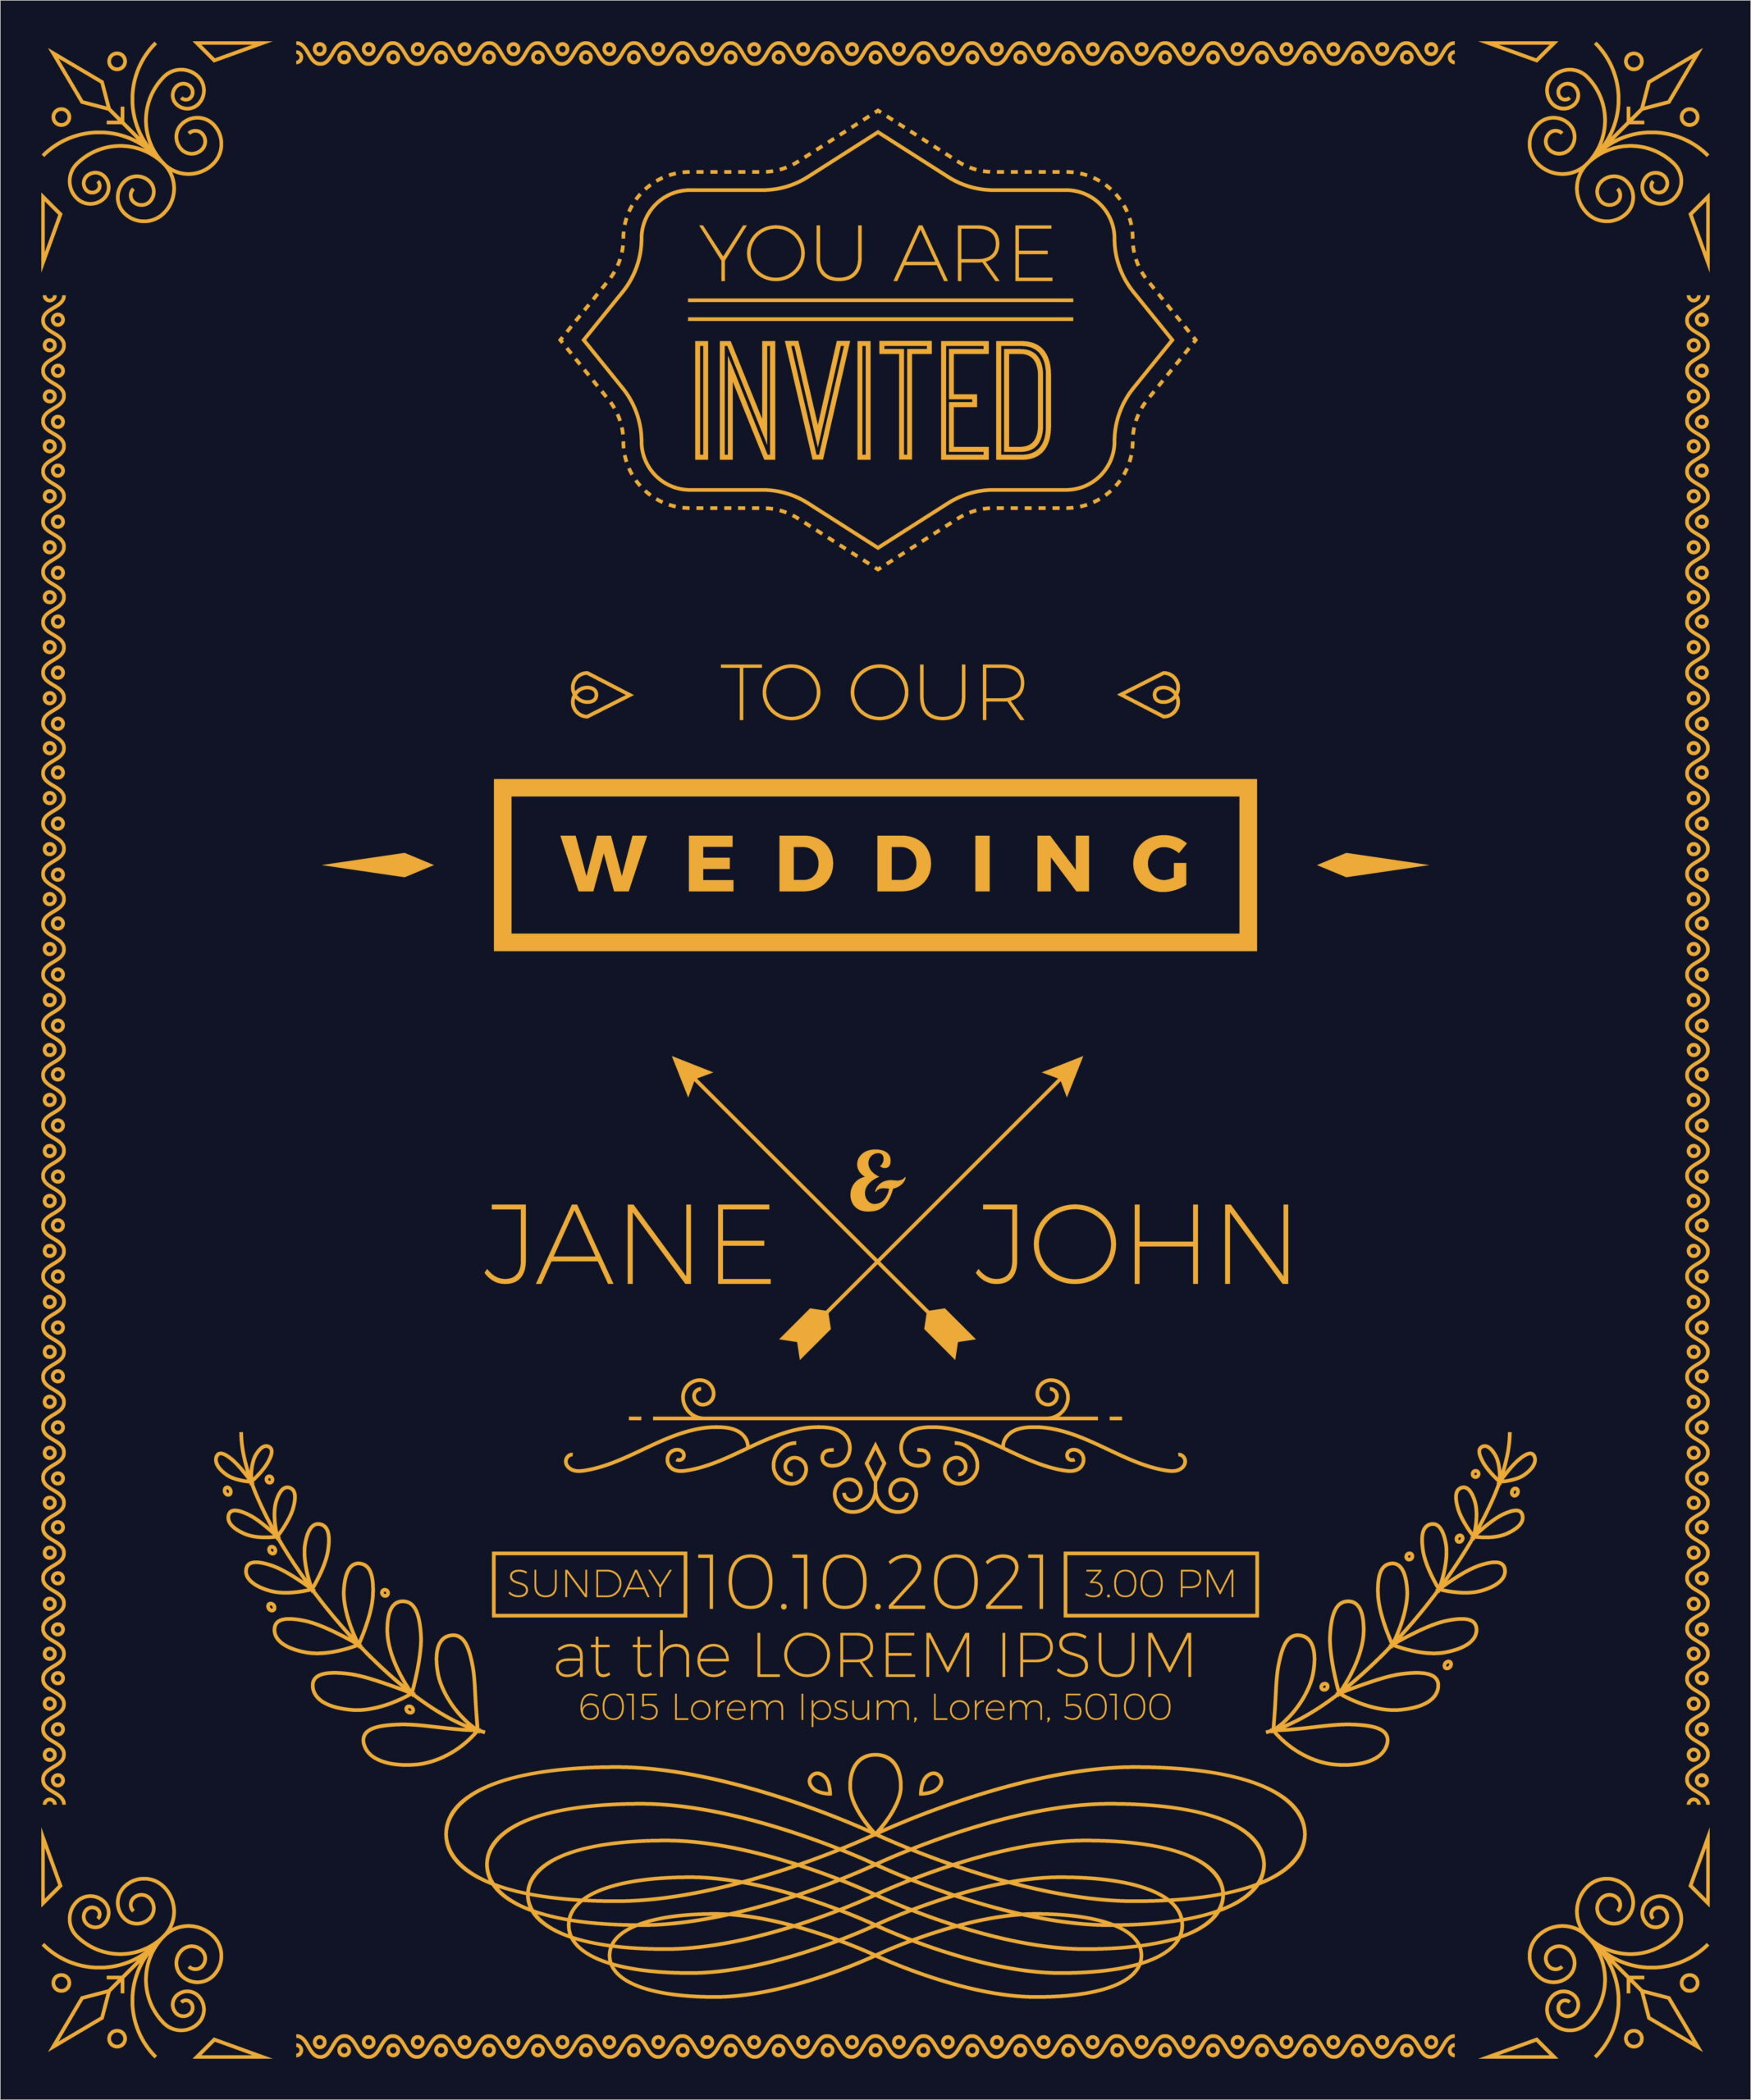 Vintage Wedding Invitation Card Template Free Download